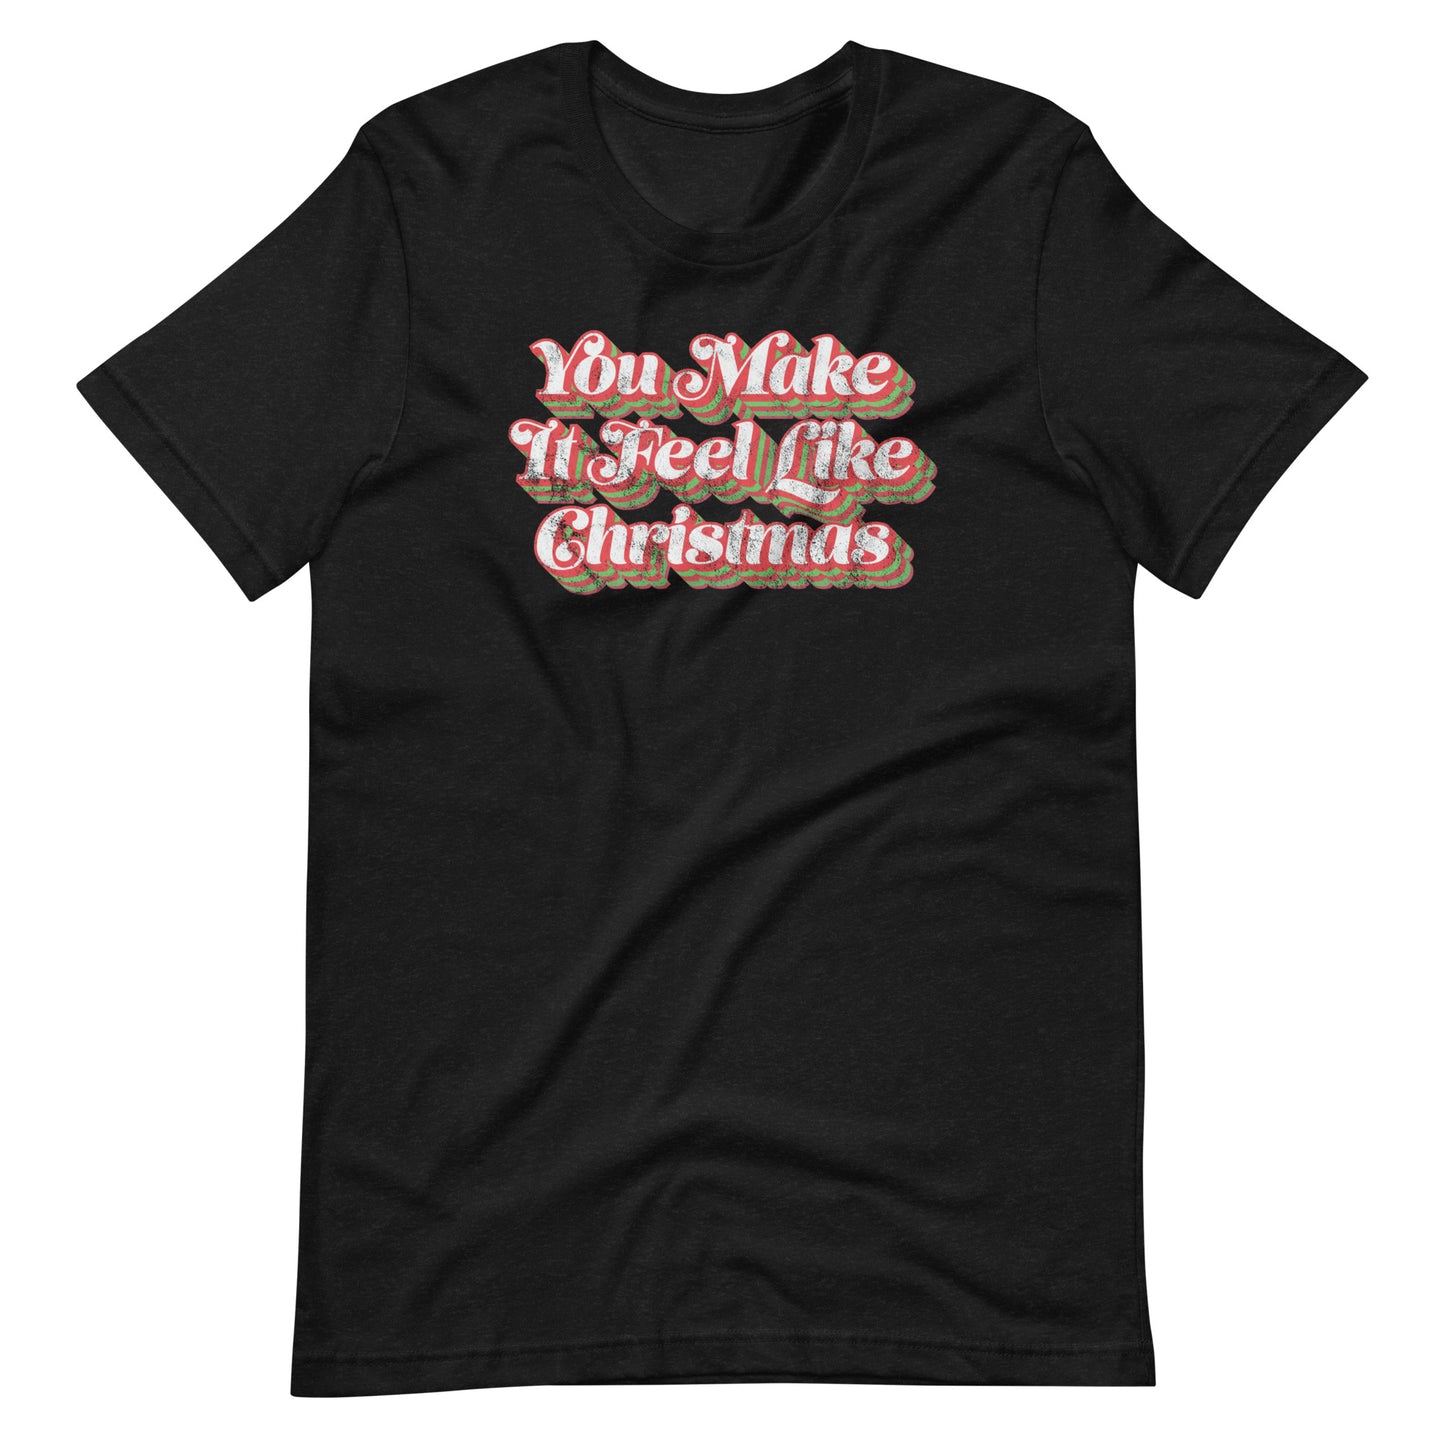 You Make It Feel Like Christmas t-shirt